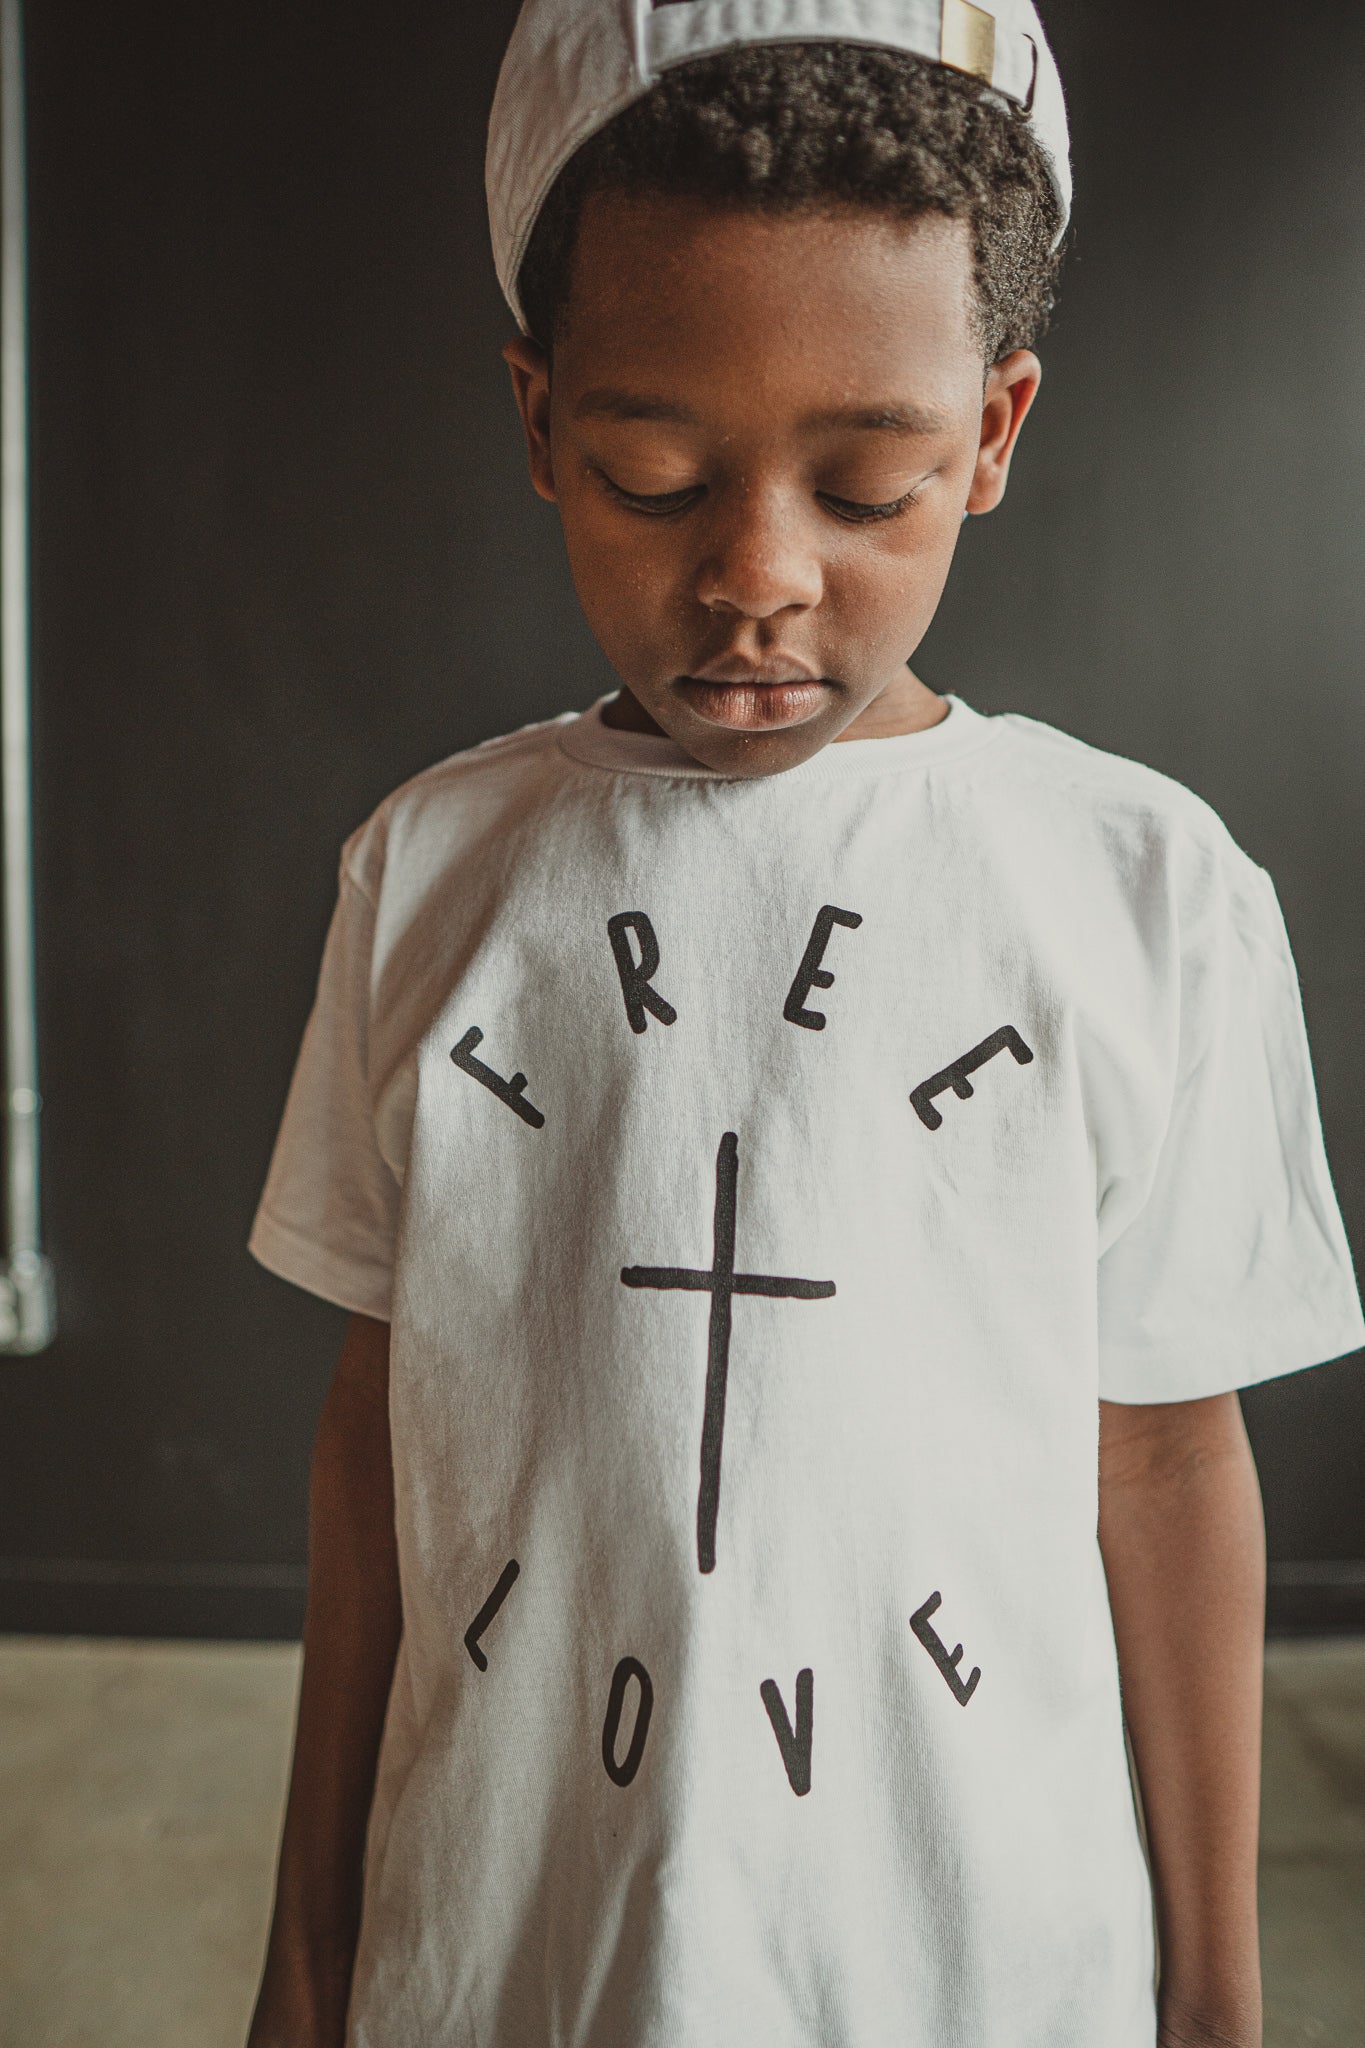 Free Love Kids T-shirt